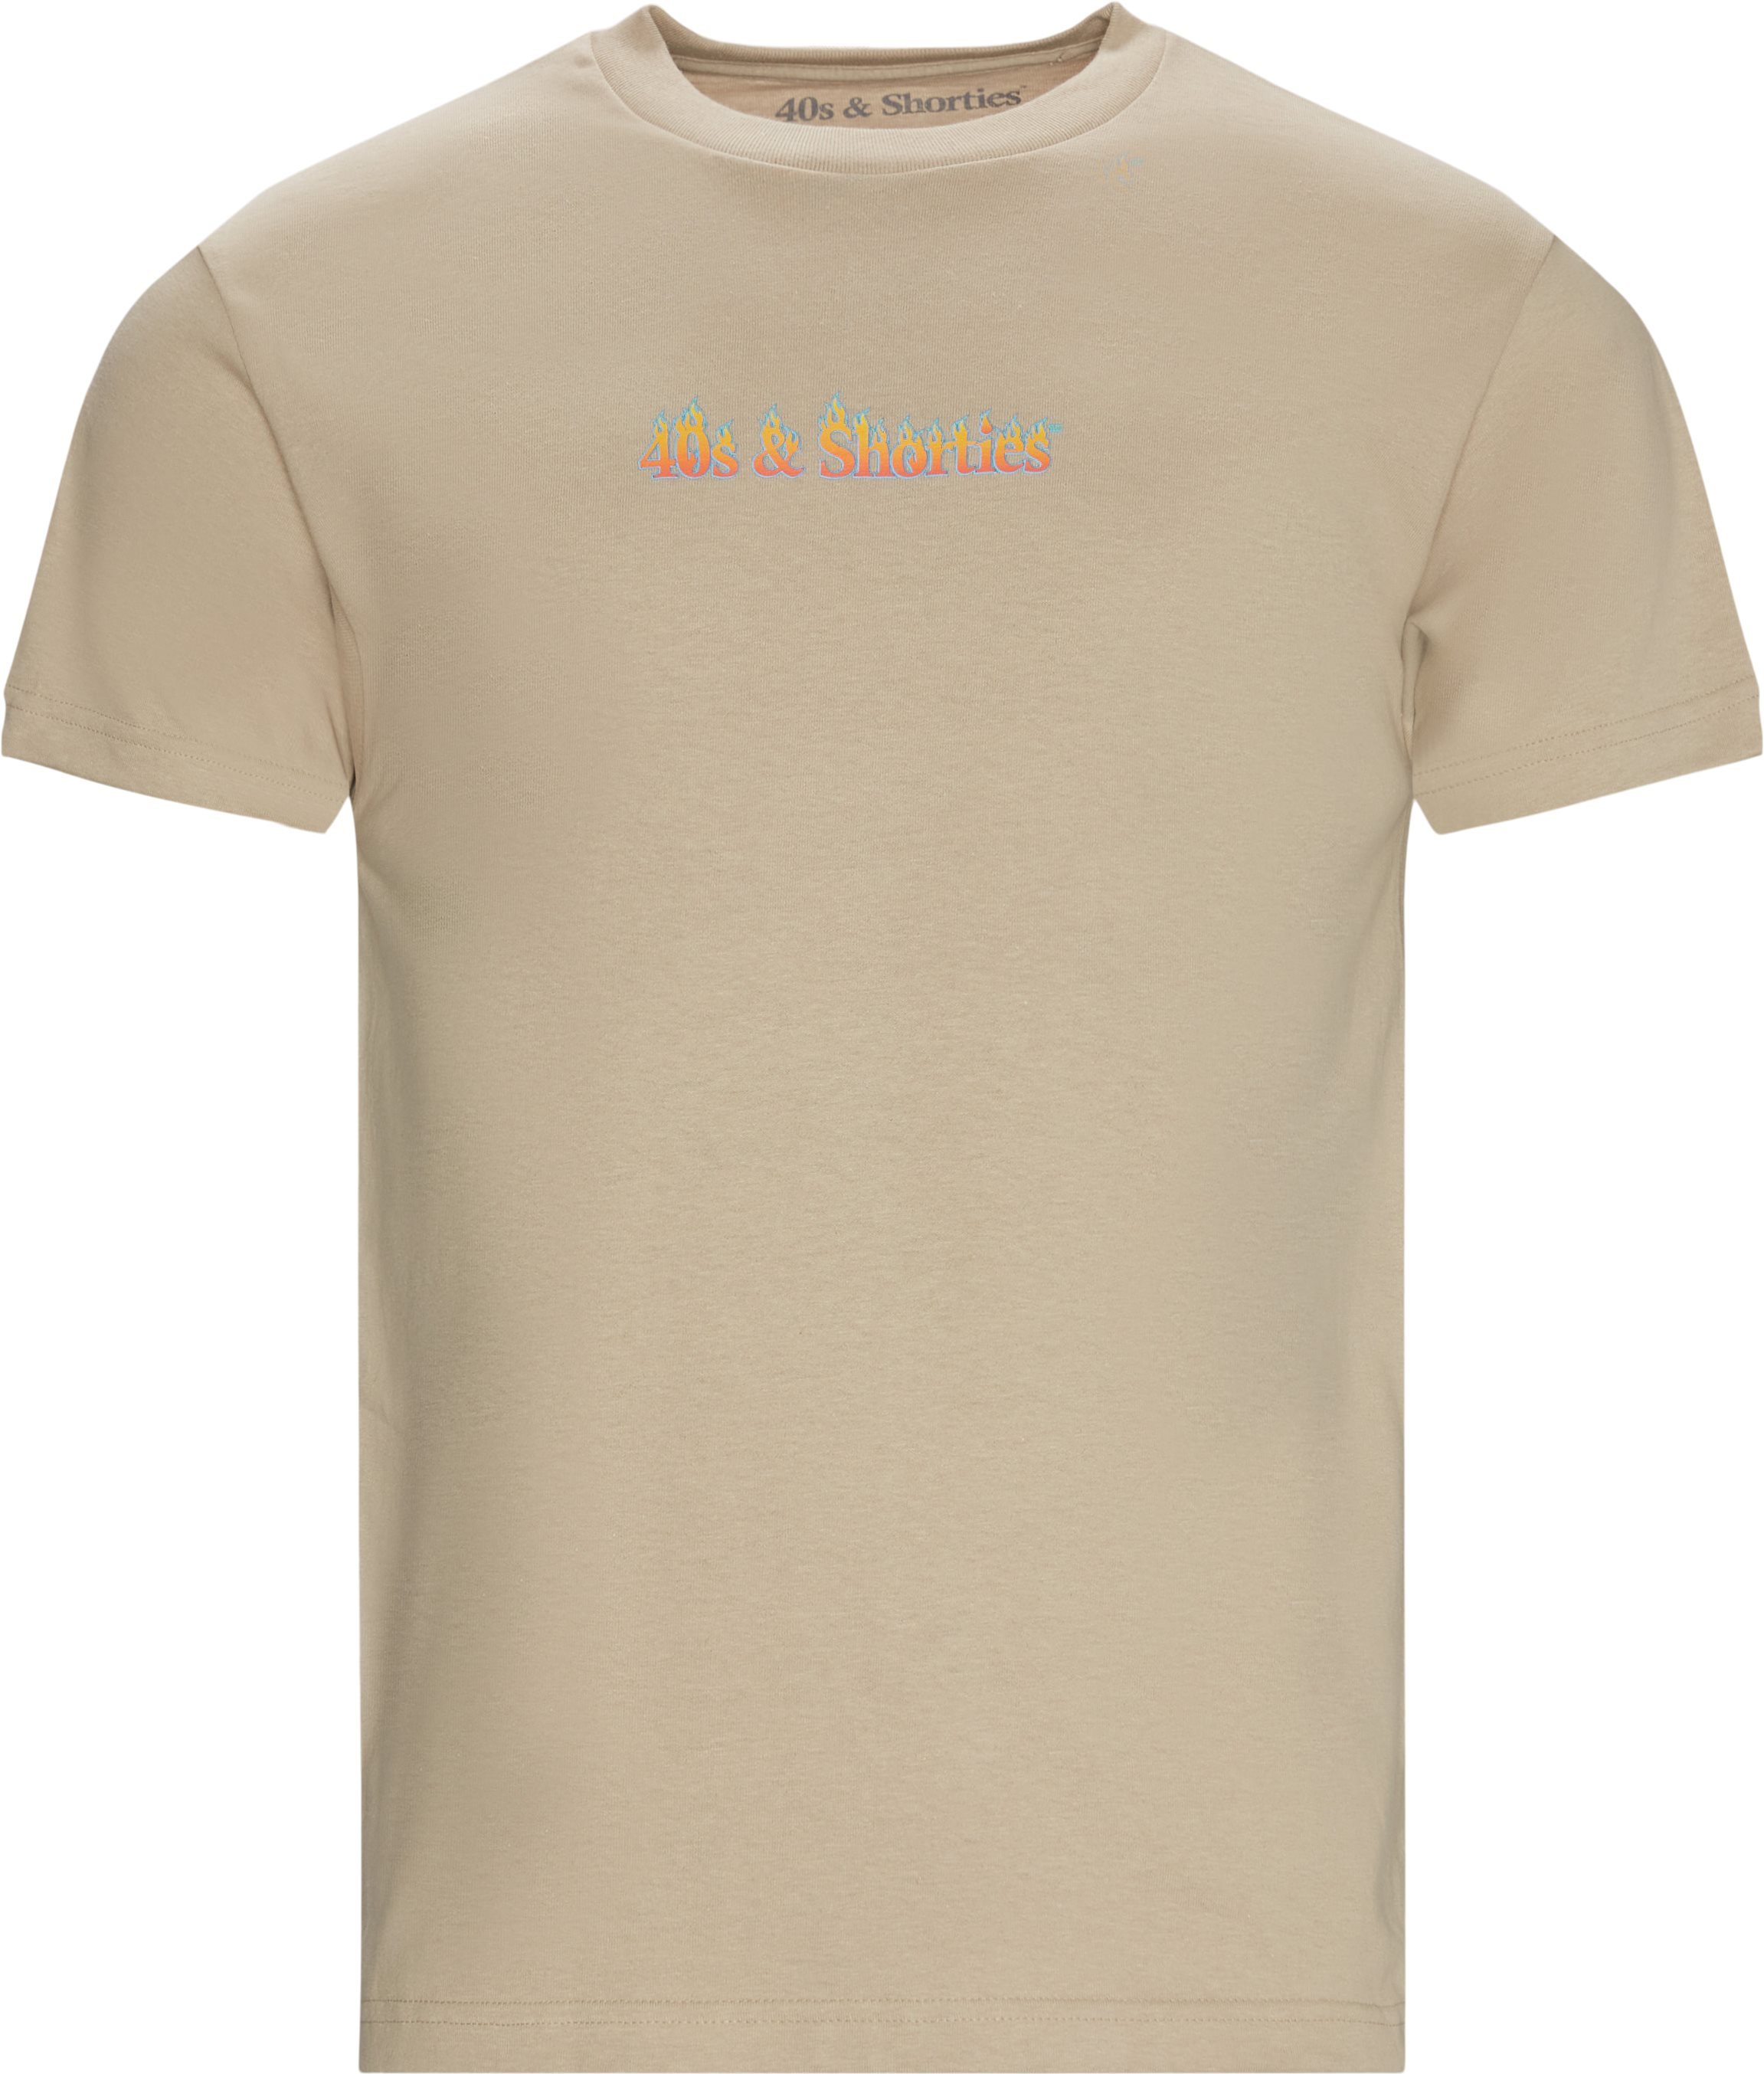 Flame Text Logo Tee - T-shirts - Regular fit - Sand